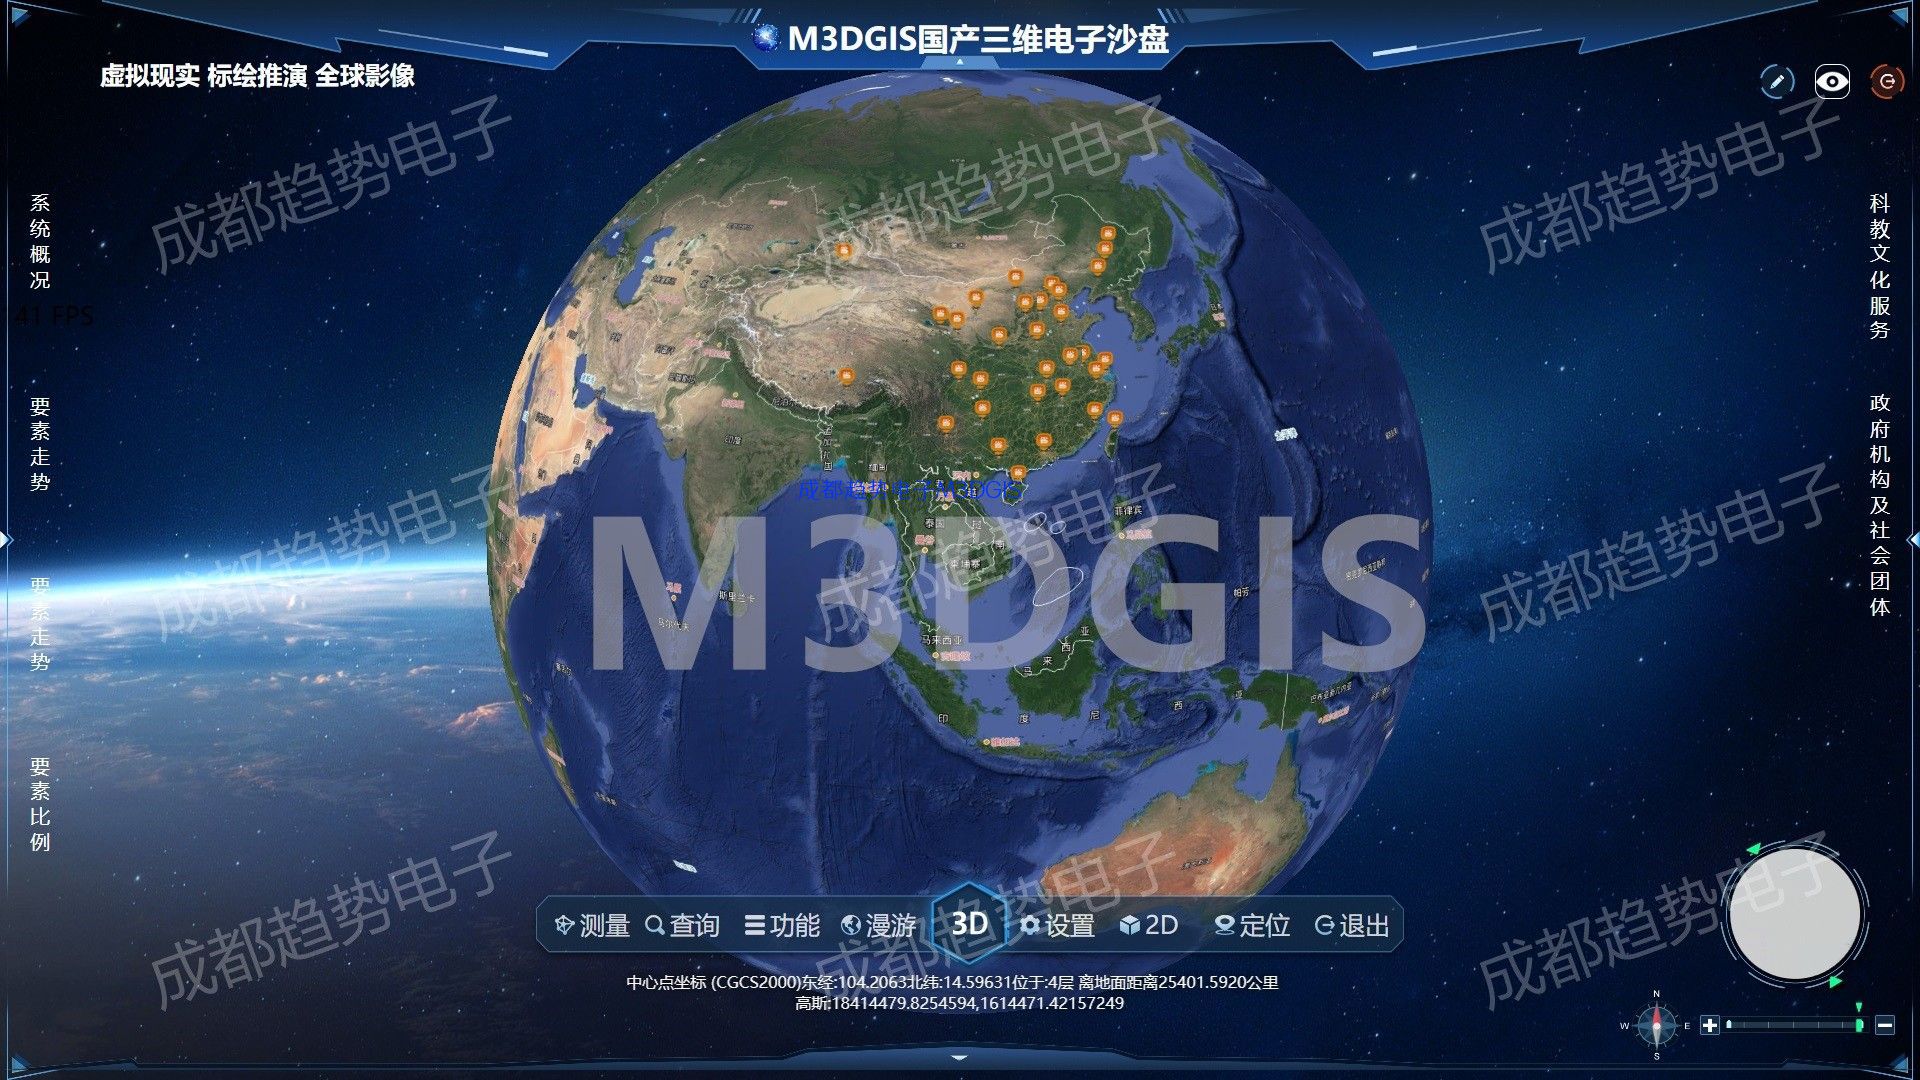 M3DGIS国产三维沙盘核心功能